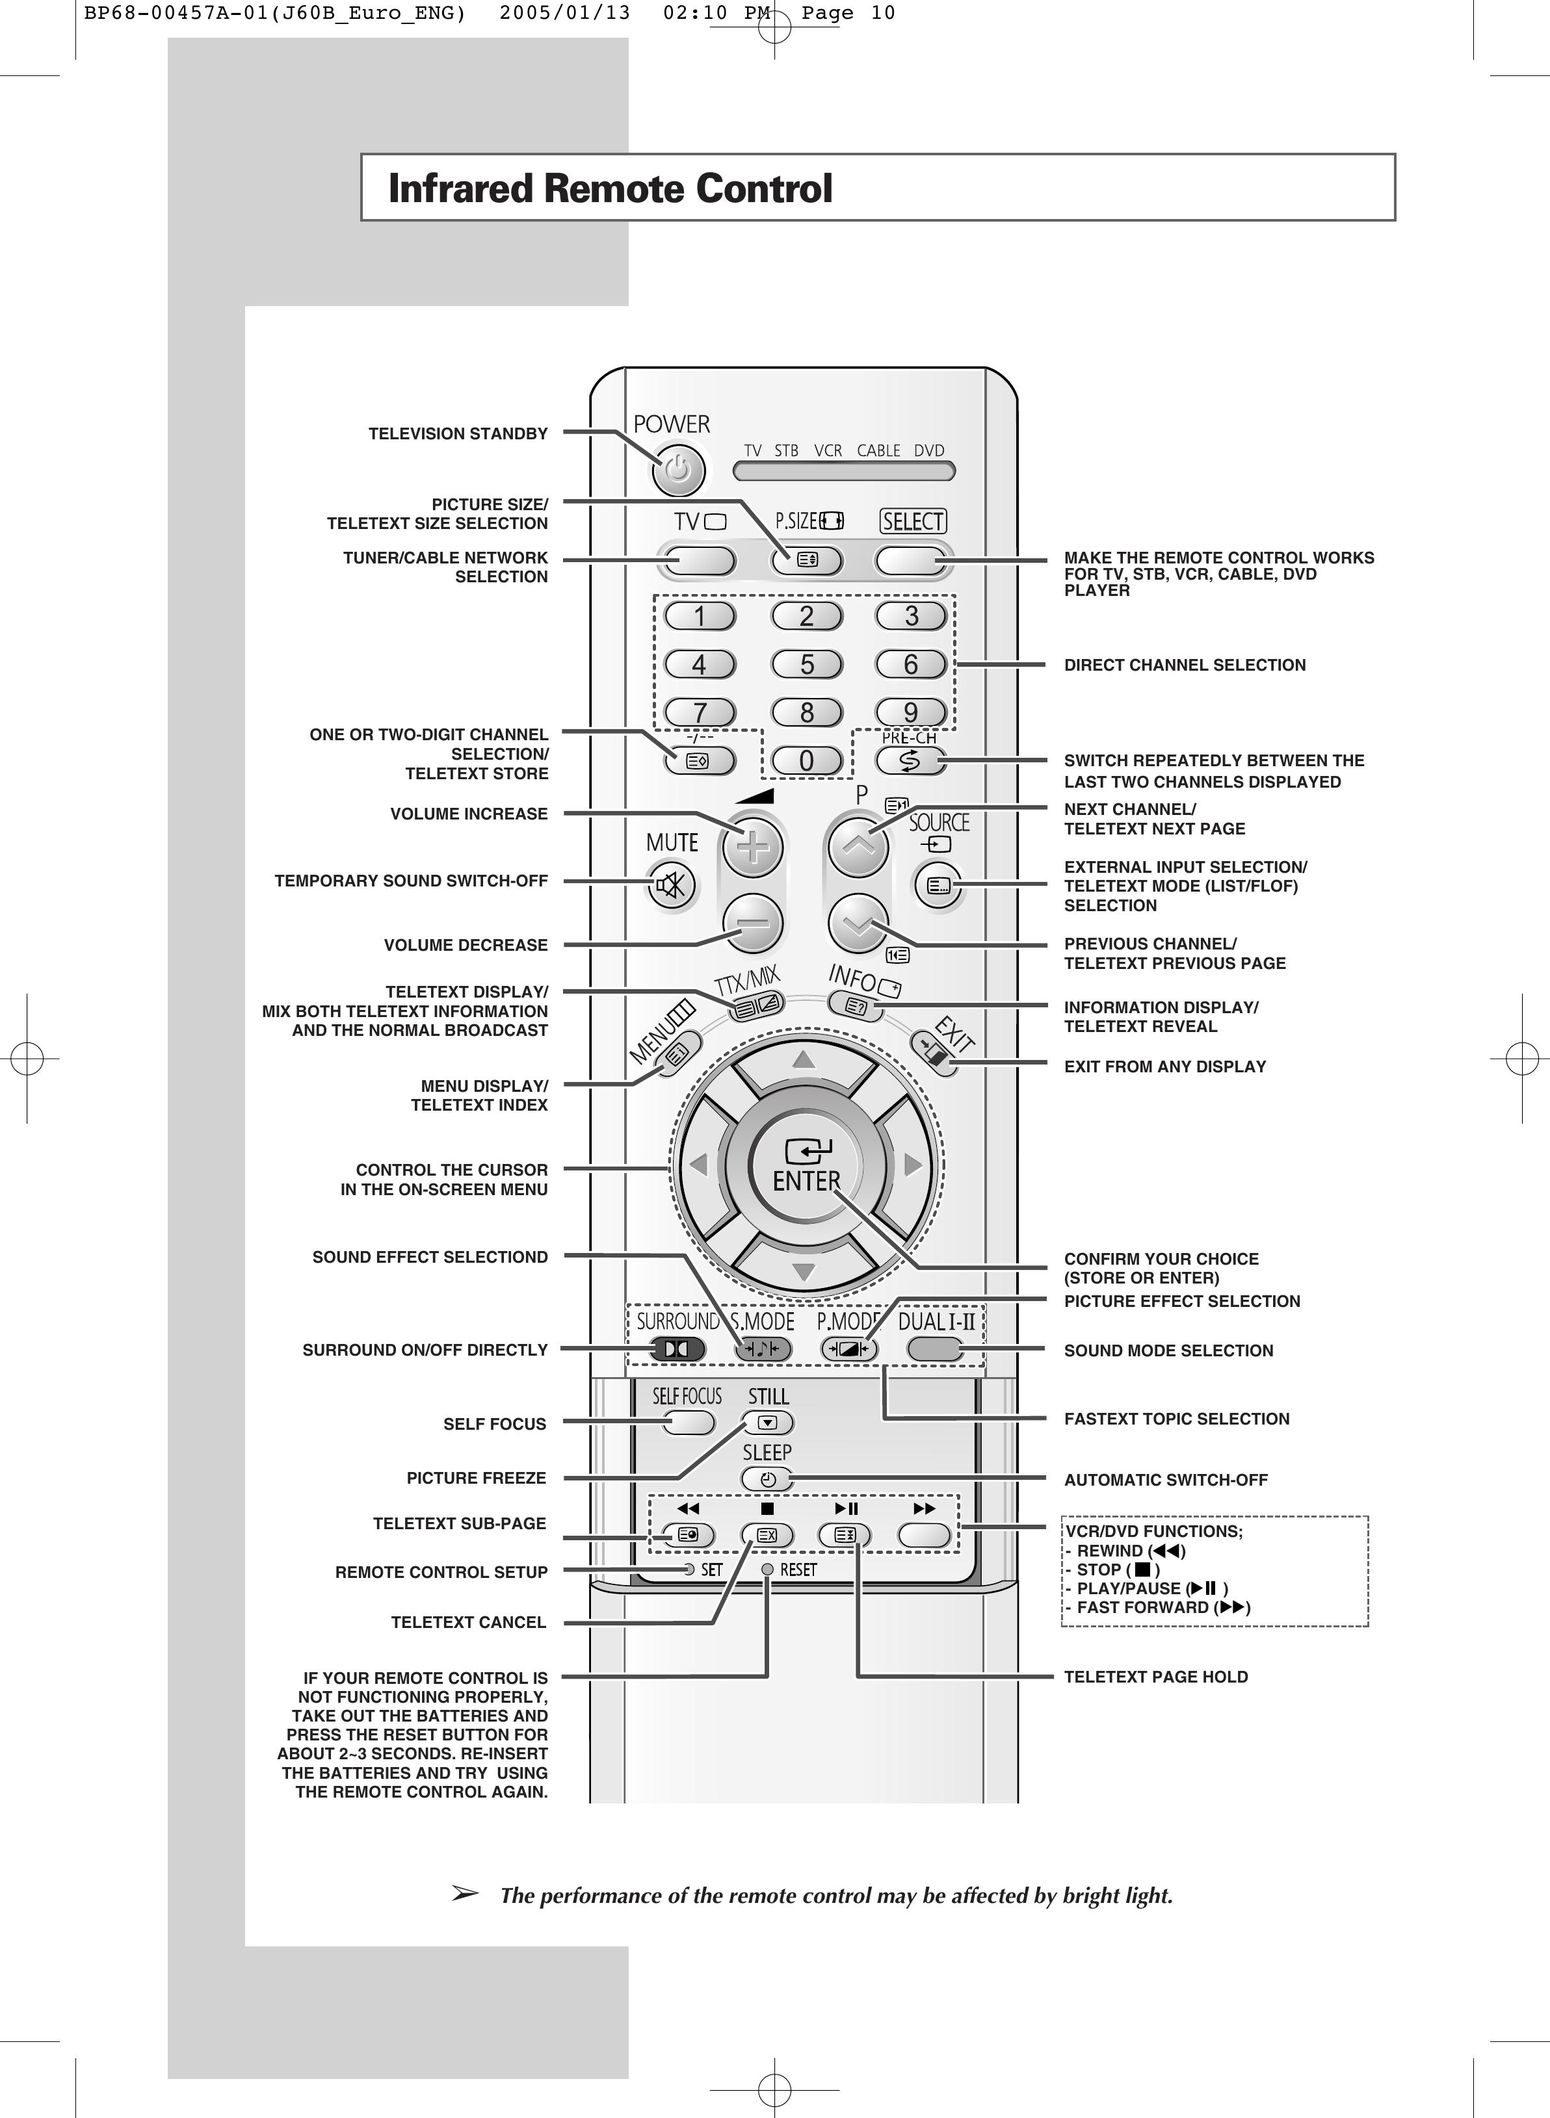 Samsung SP-43R1HL Universal Remote User Manual